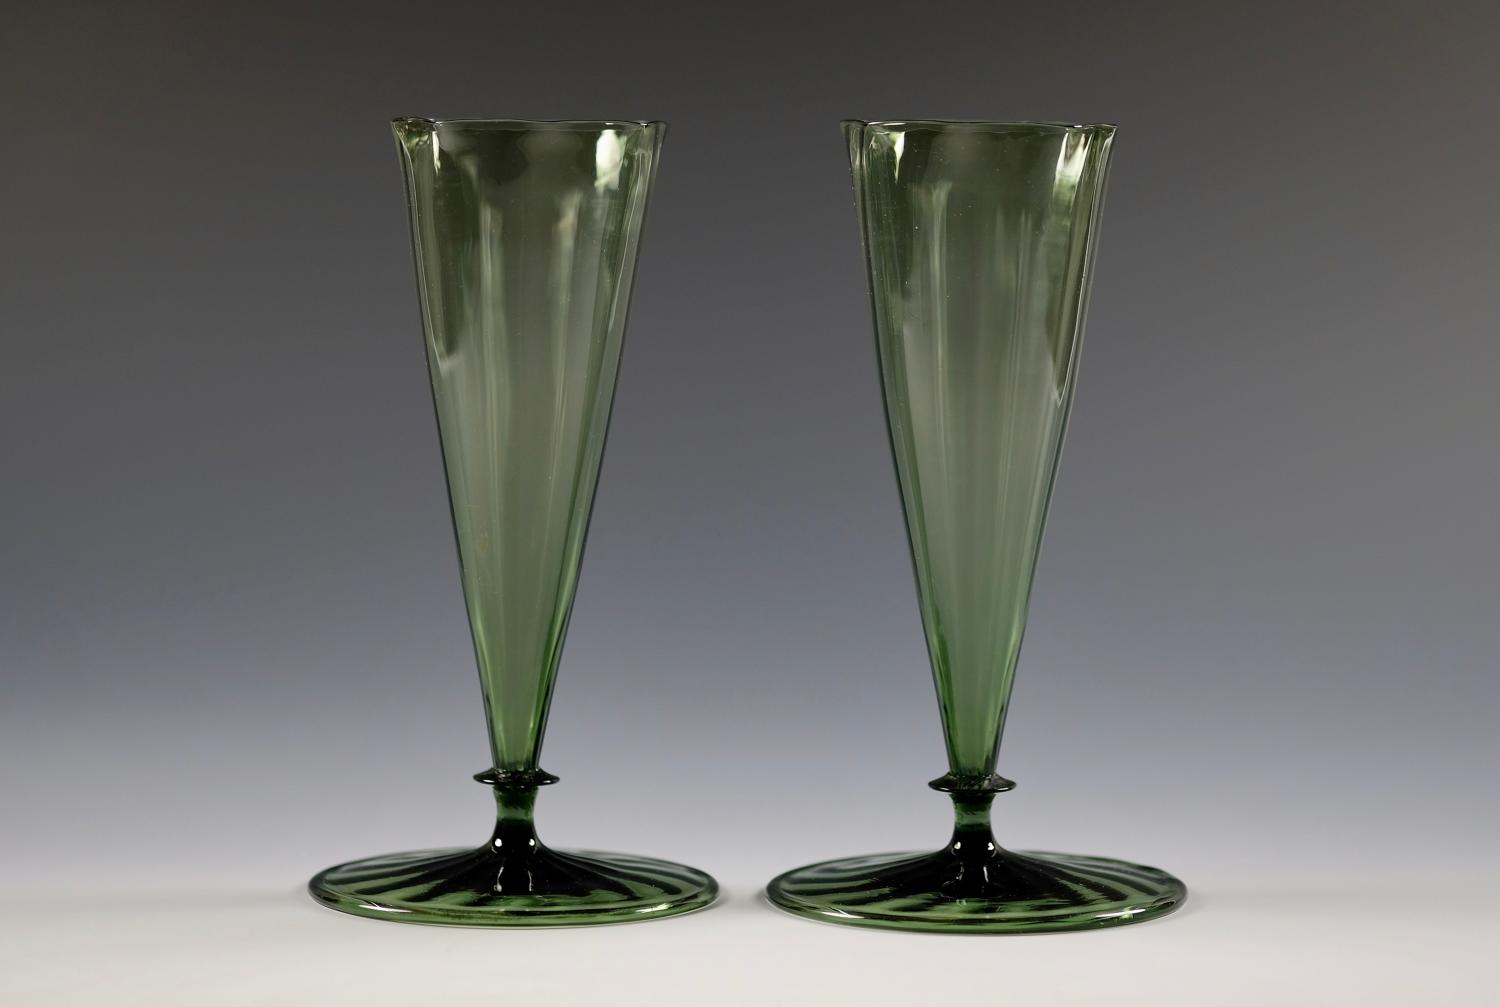 Pair of dark green vases designed by Harry Powell C1870